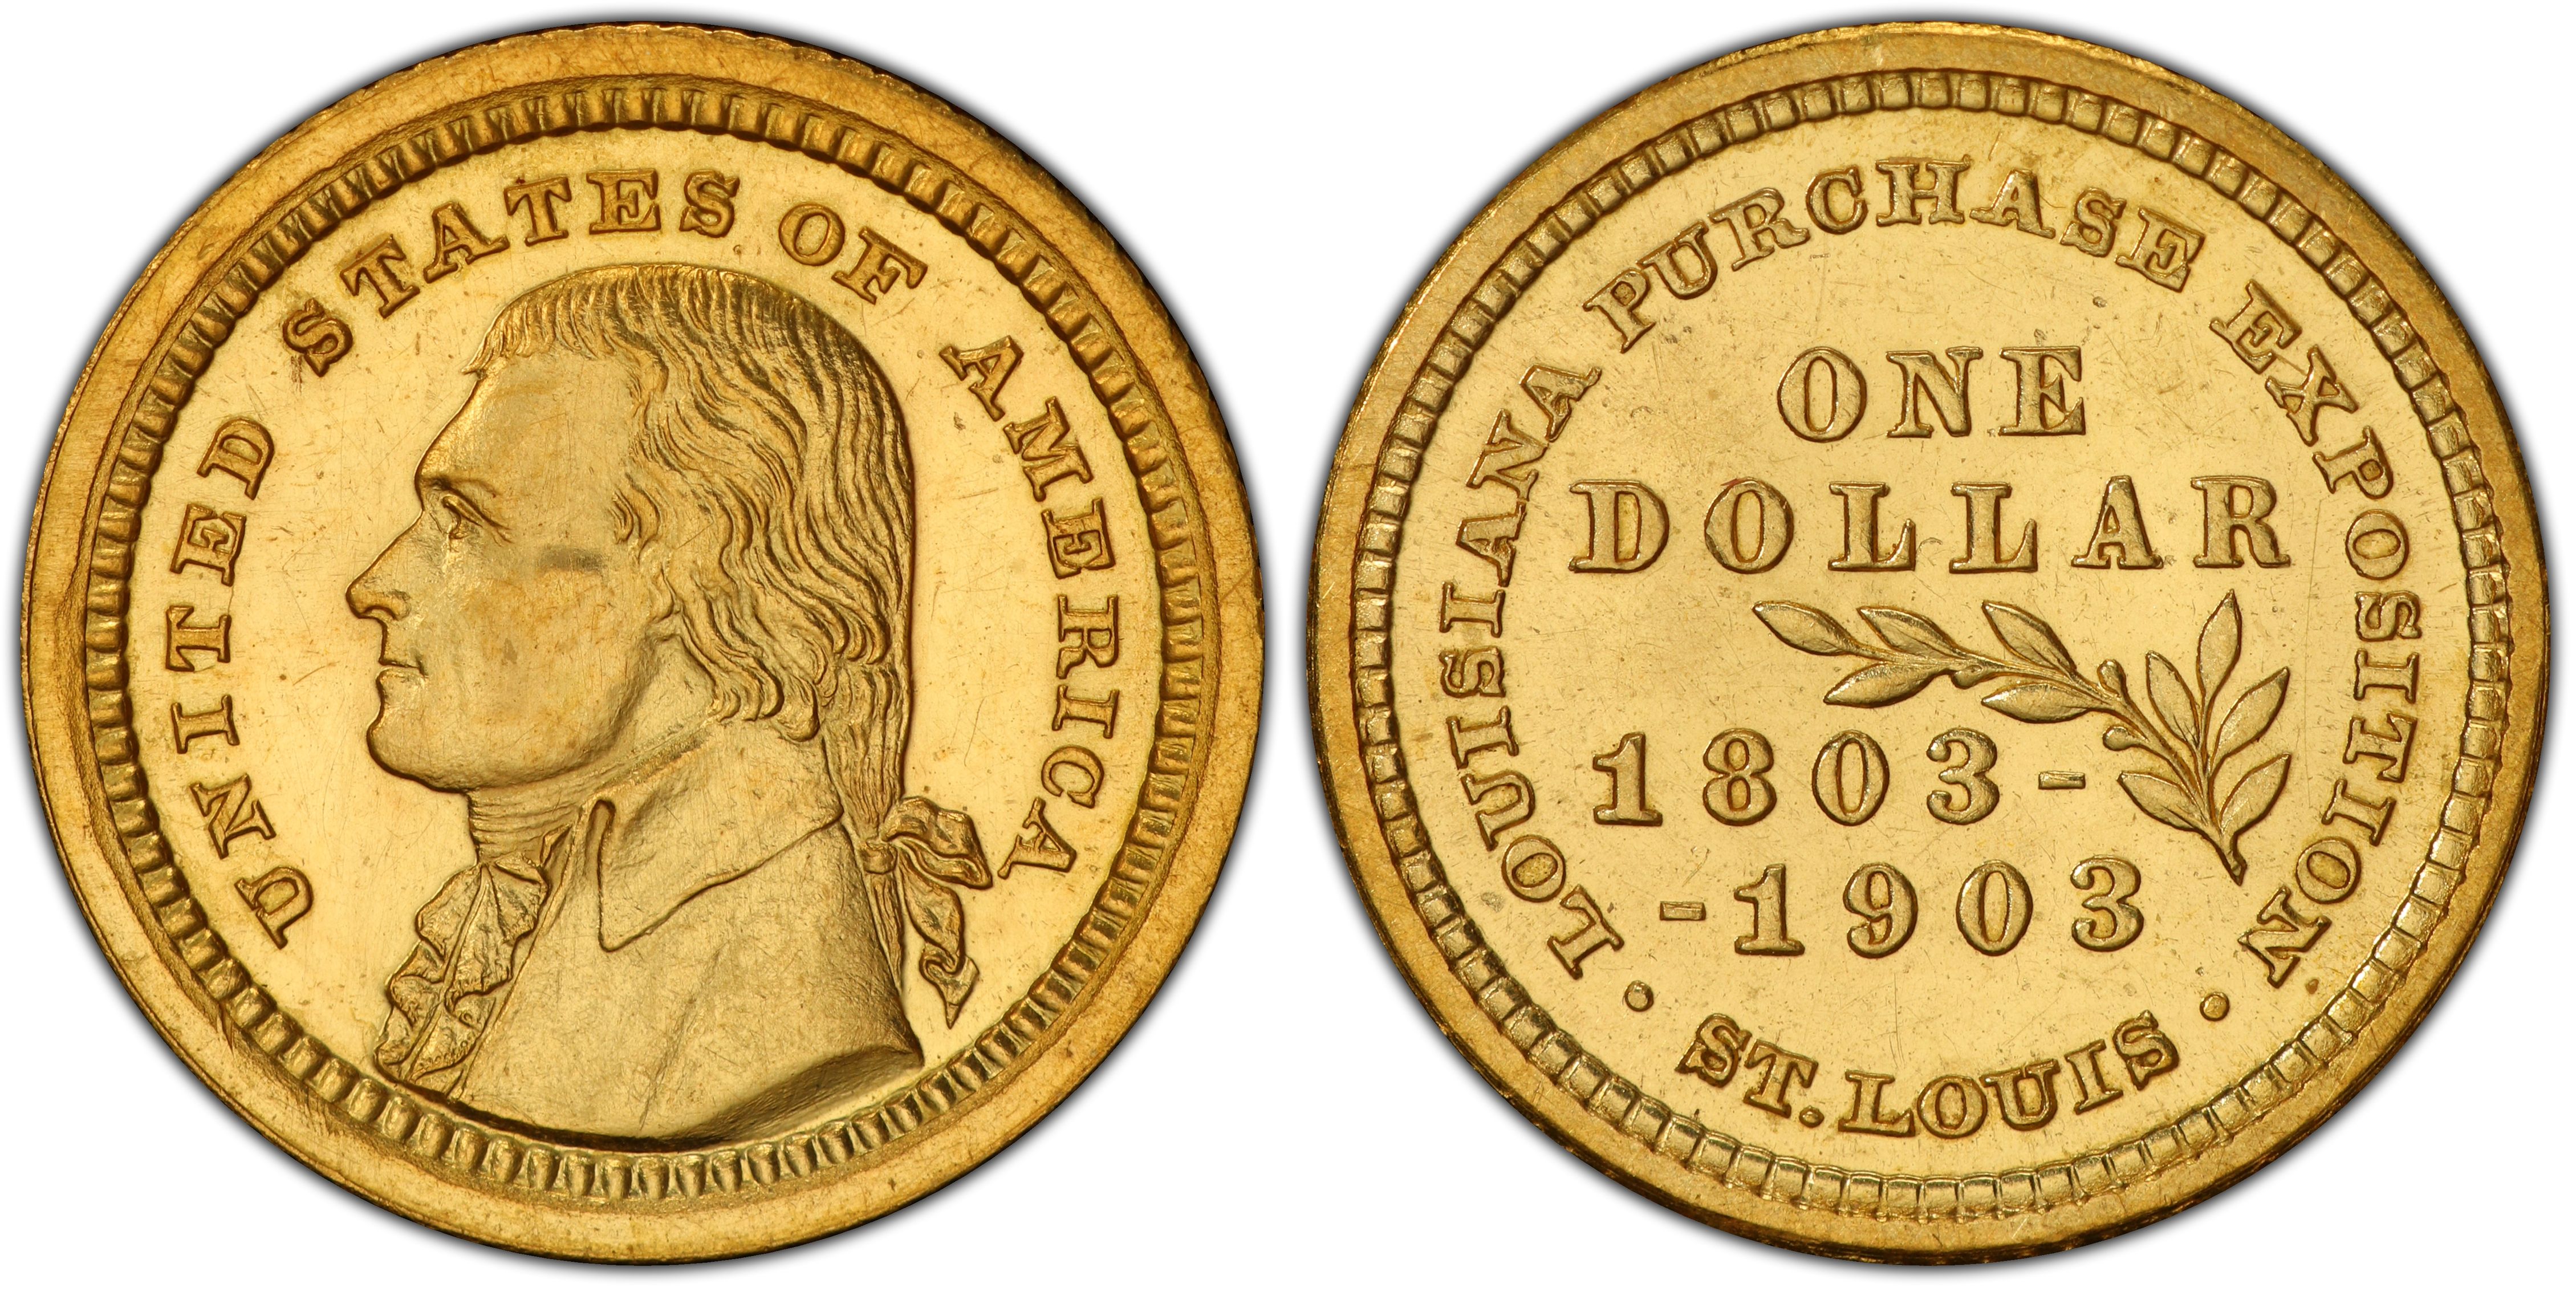 1903 G$1 LA Purchase, Jefferson (Proof) Gold Commemorative - PCGS CoinFacts